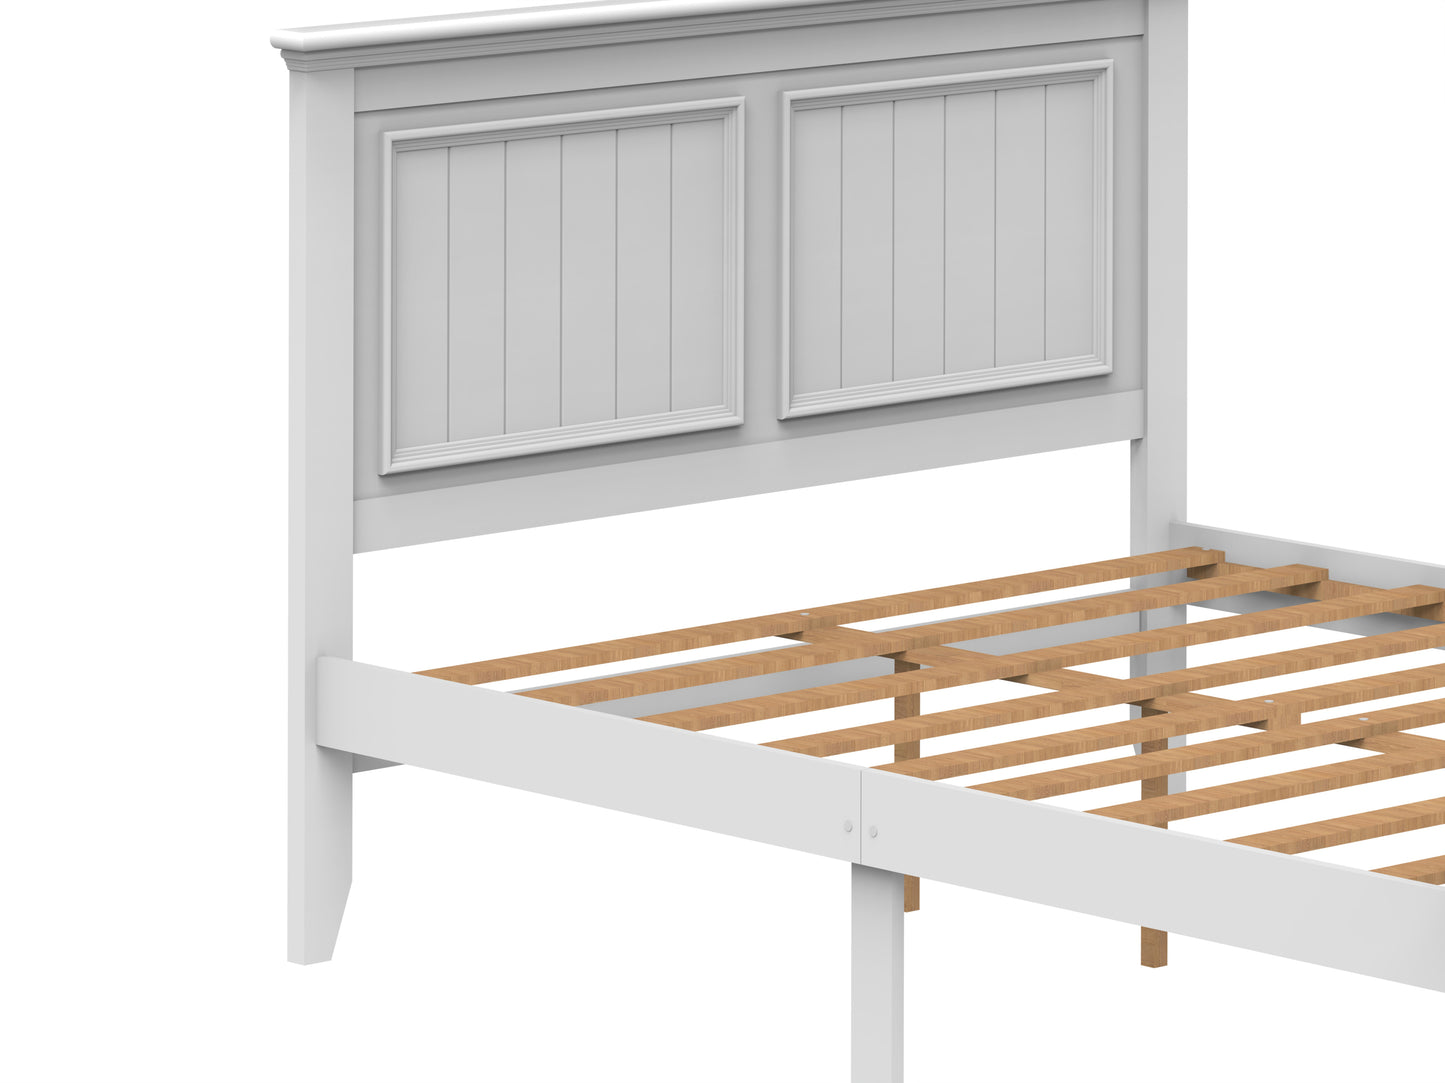 Queen Size Wooden Platform Bed Frame, Modern Country Inspired, Timeless Design & Elegant With Embellish Details, Paint Sprayed Finishing